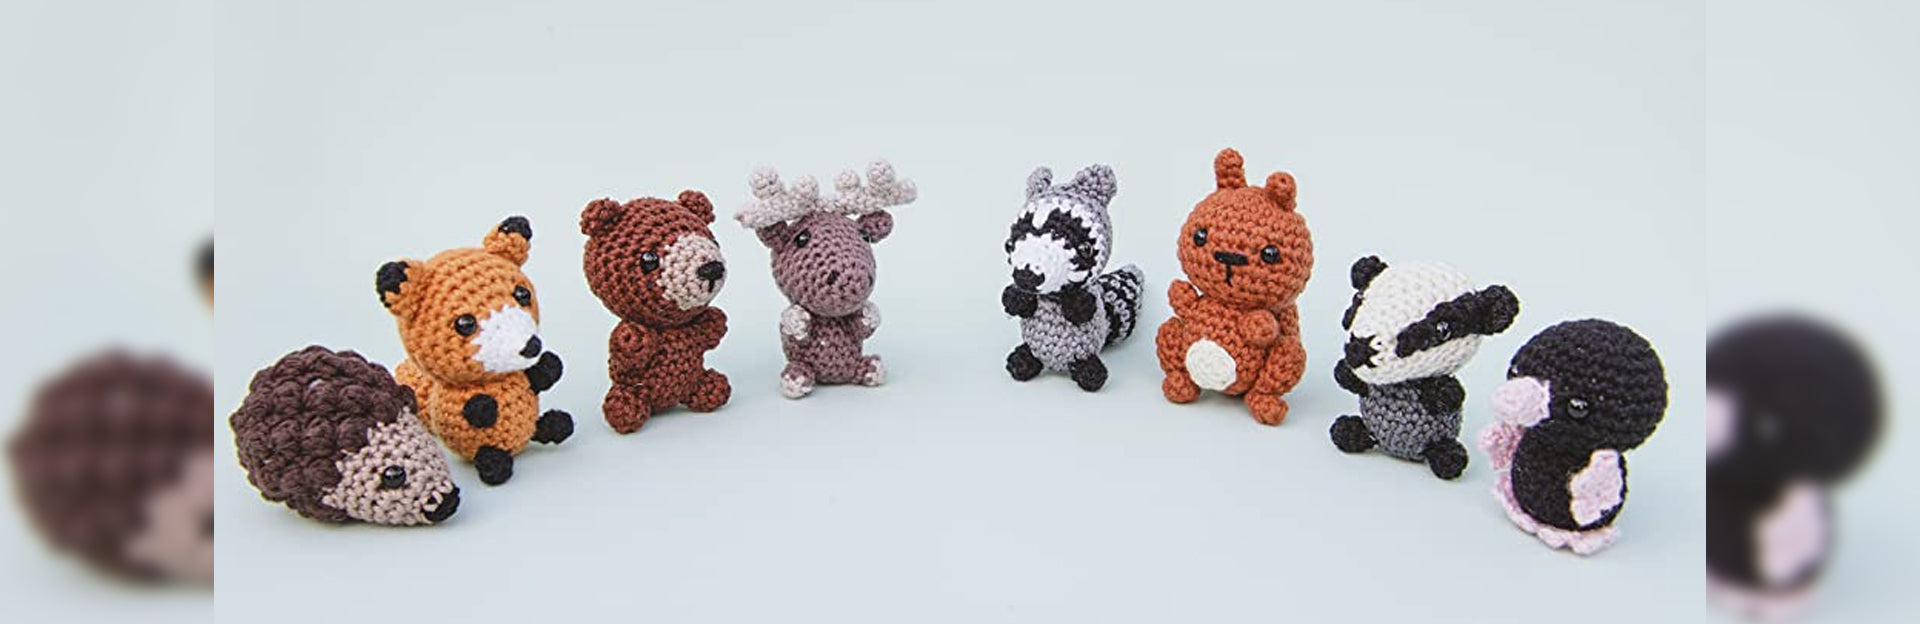 15 Crochet Animals For Beginners: Ideas